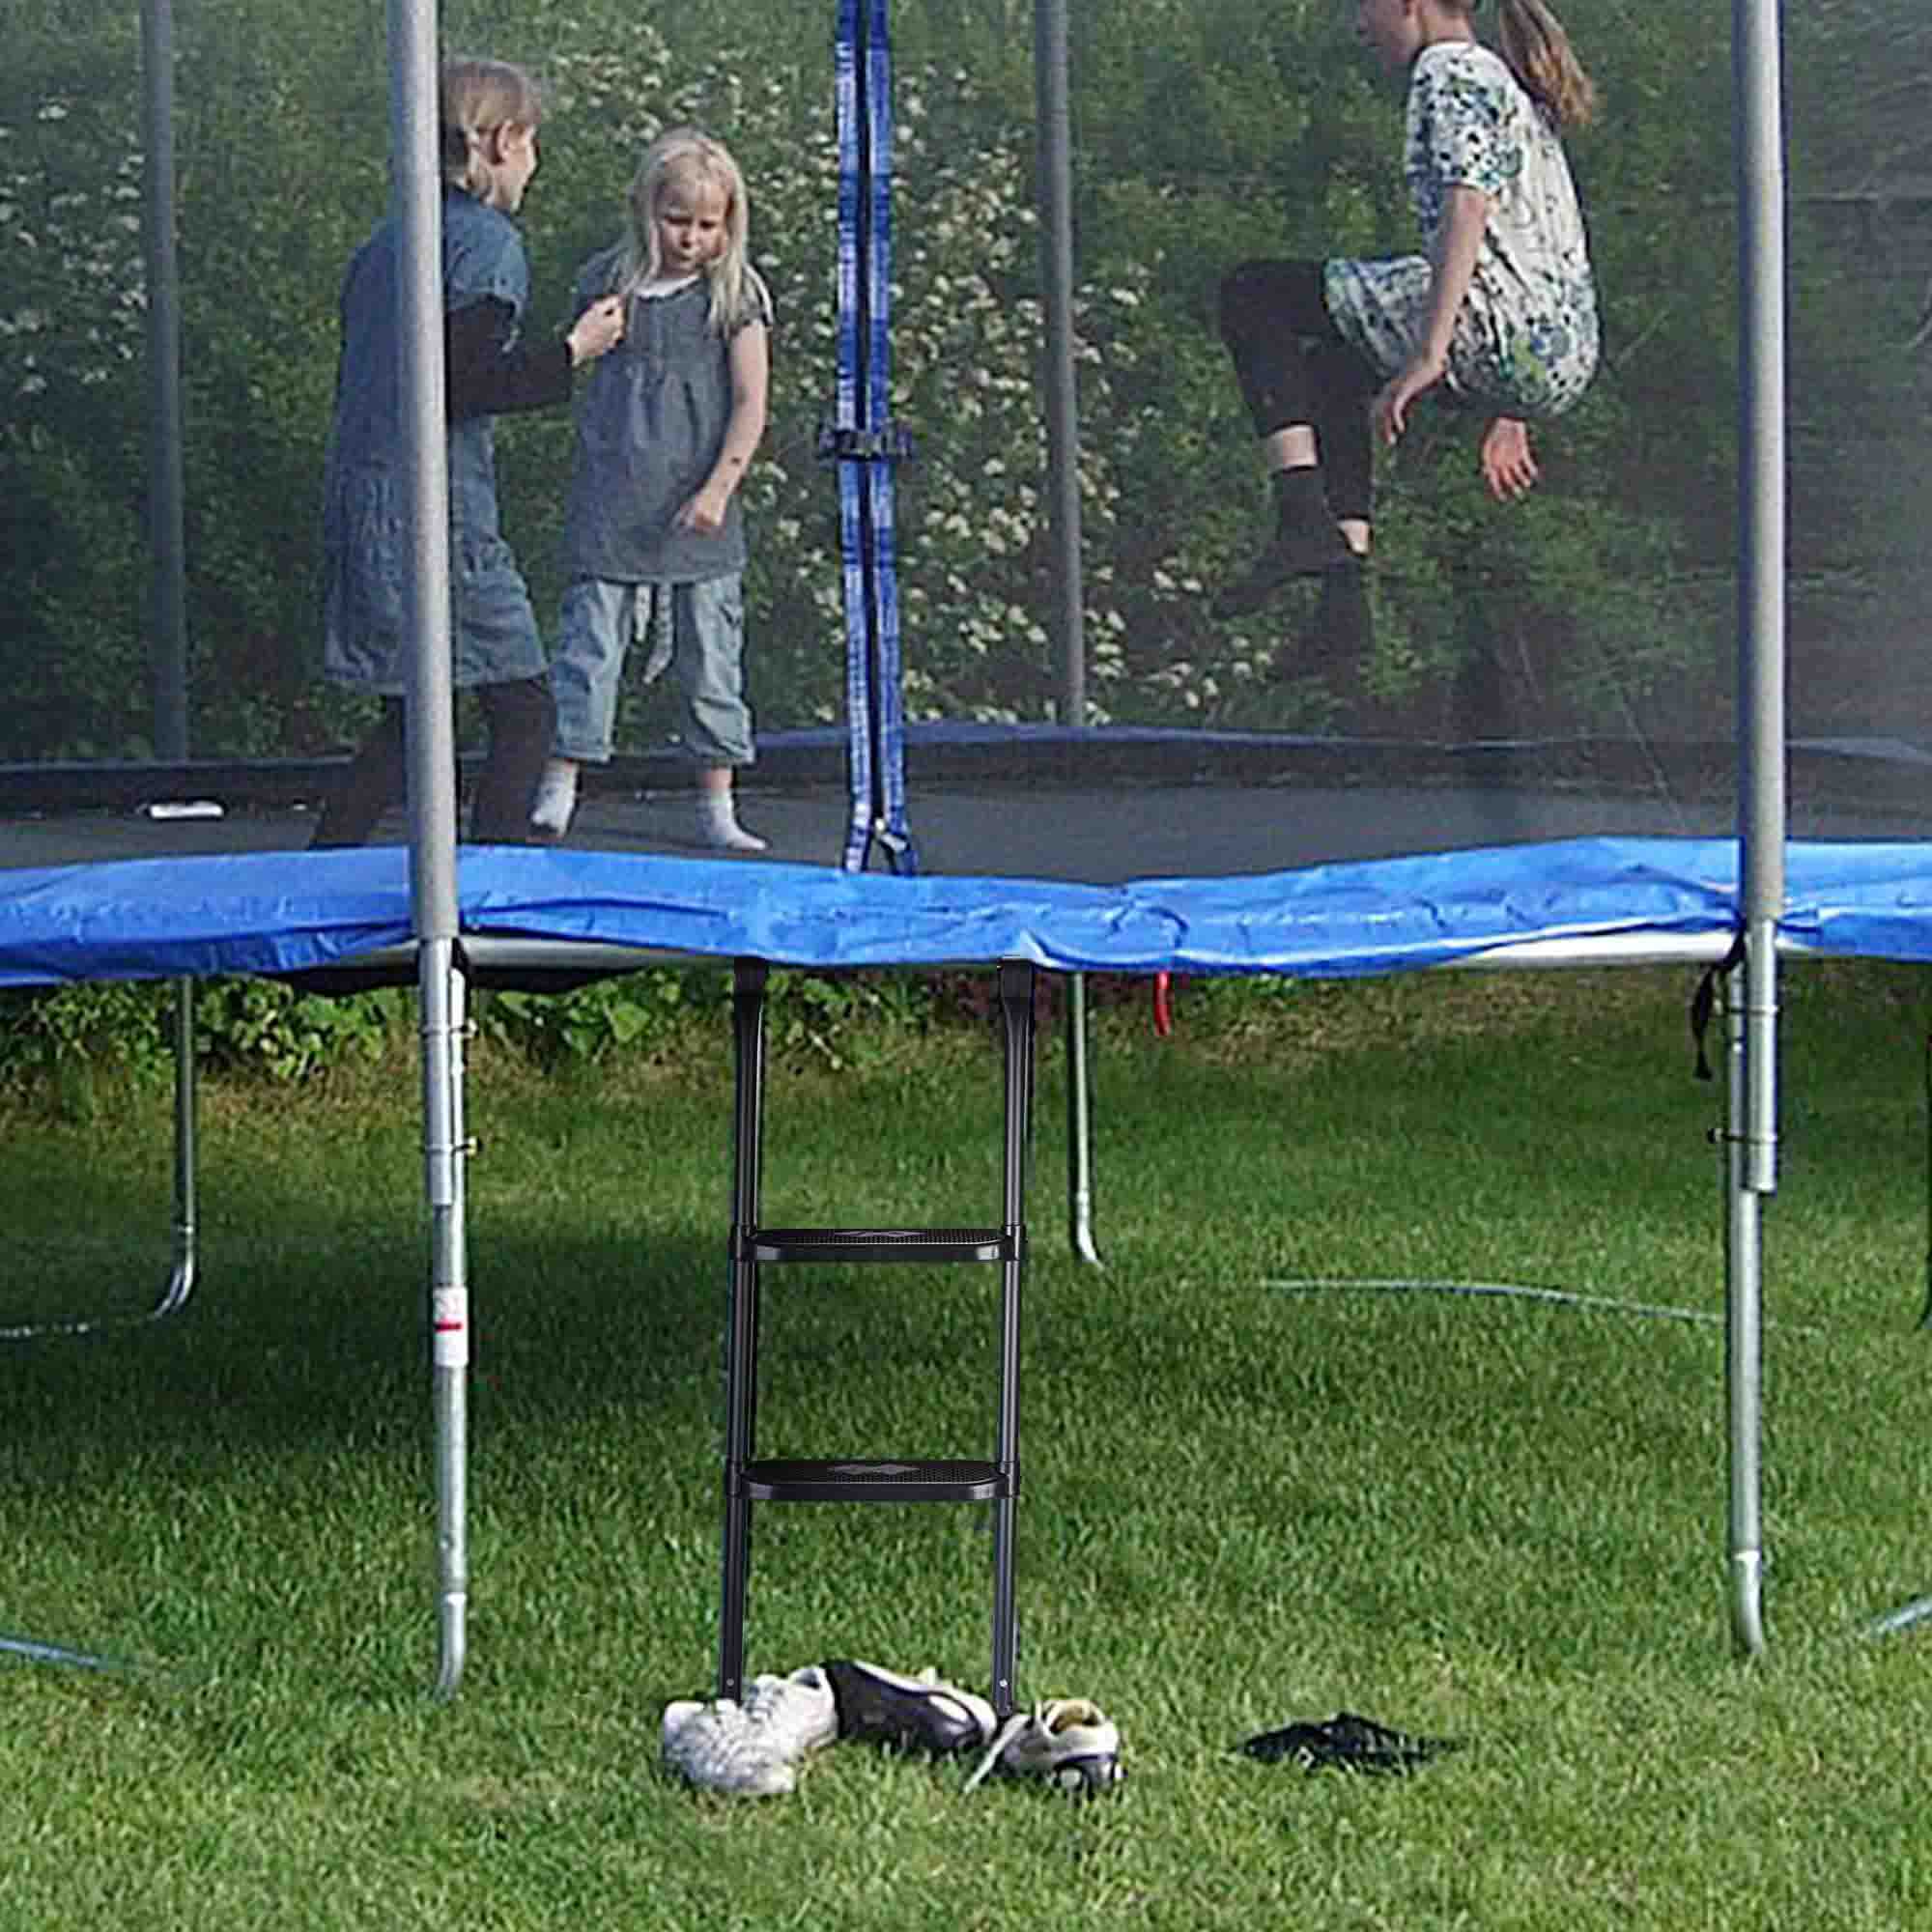 Yescom Trampoline Ladder-2 Steps for 12-14ft trampoline Image